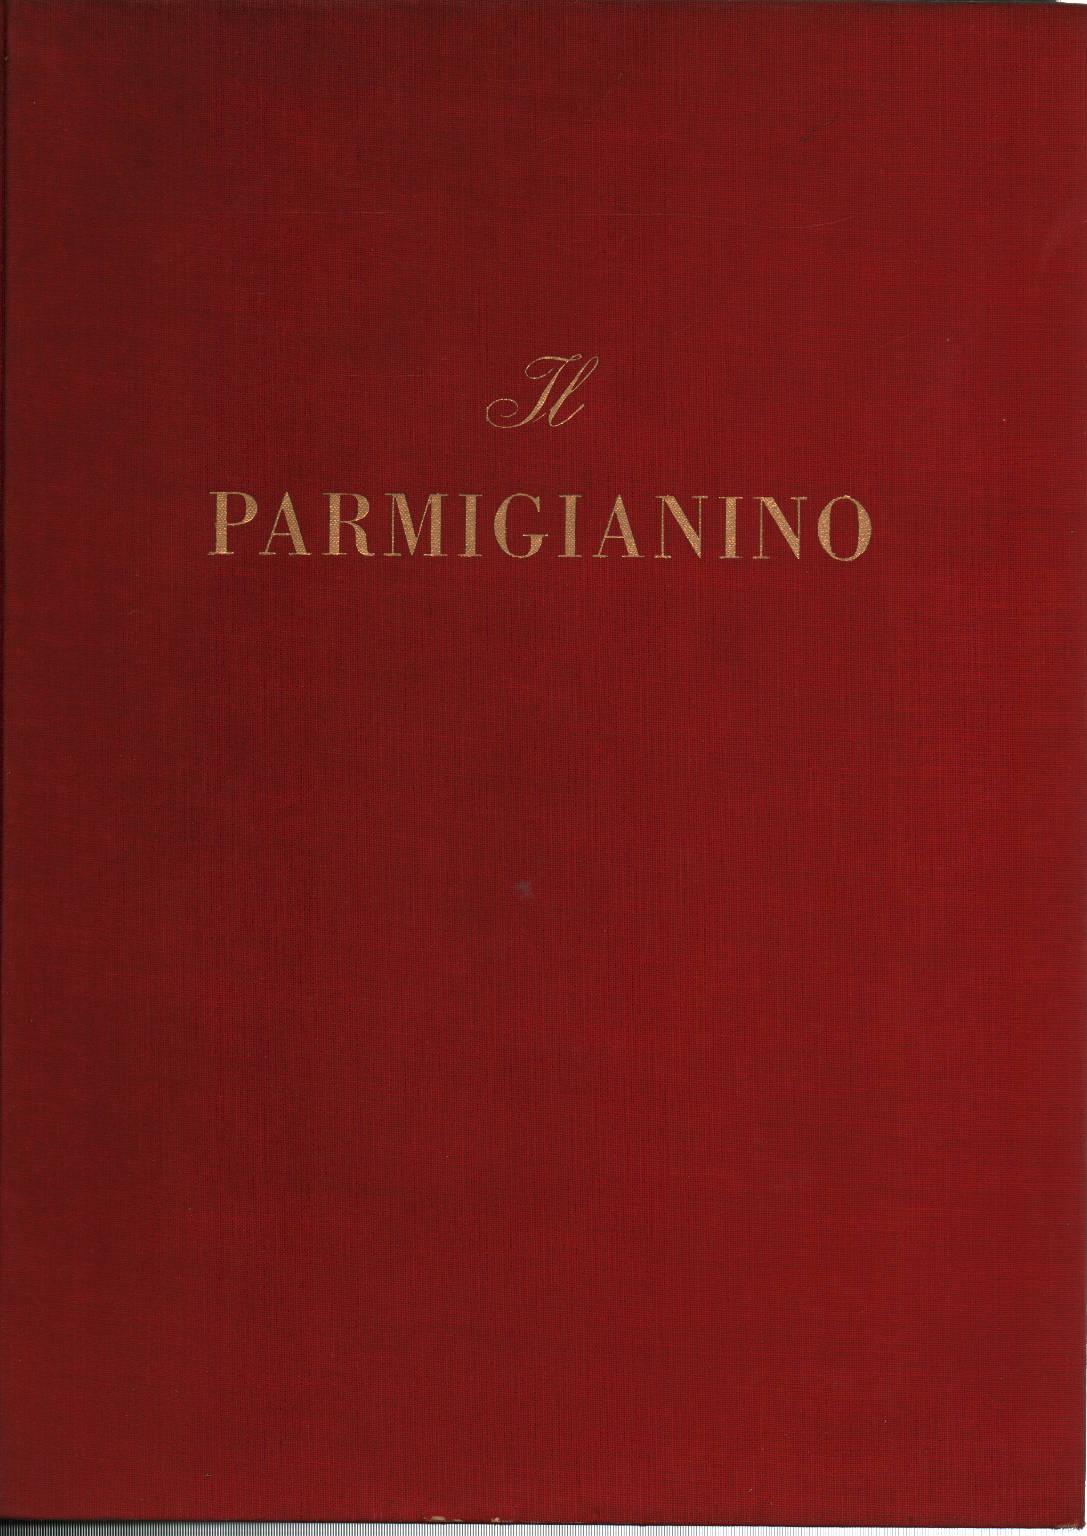 Il Parmigianino, Armando Ottaviano Quintavalle